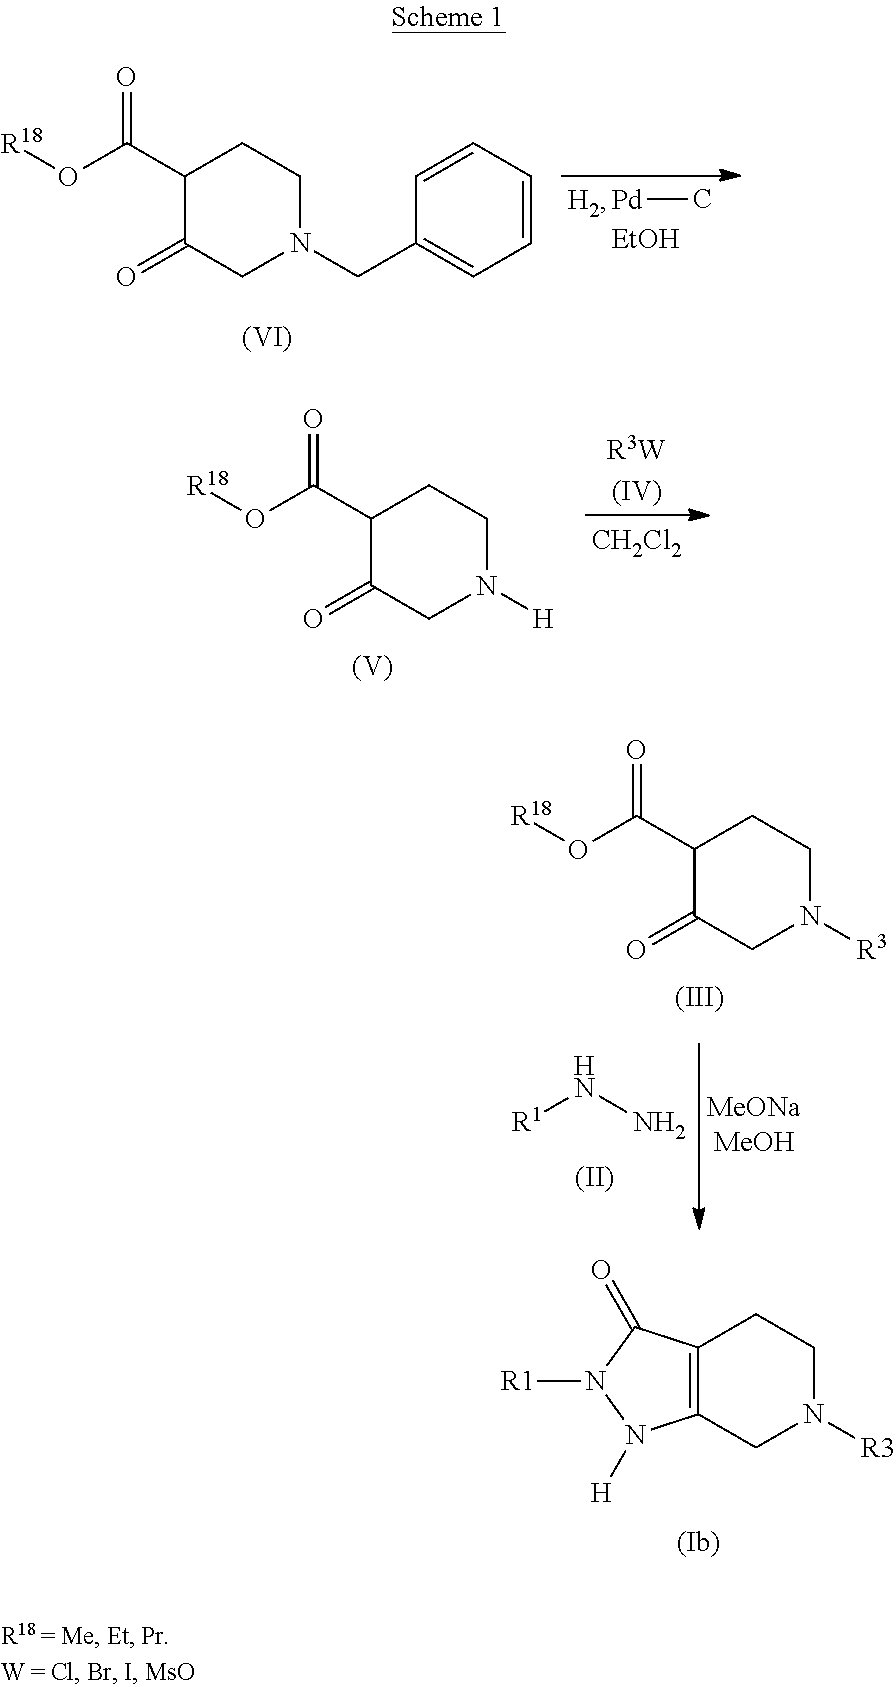 Pyrazolo piperidine derivatives as NADPH oxidase inhibitors